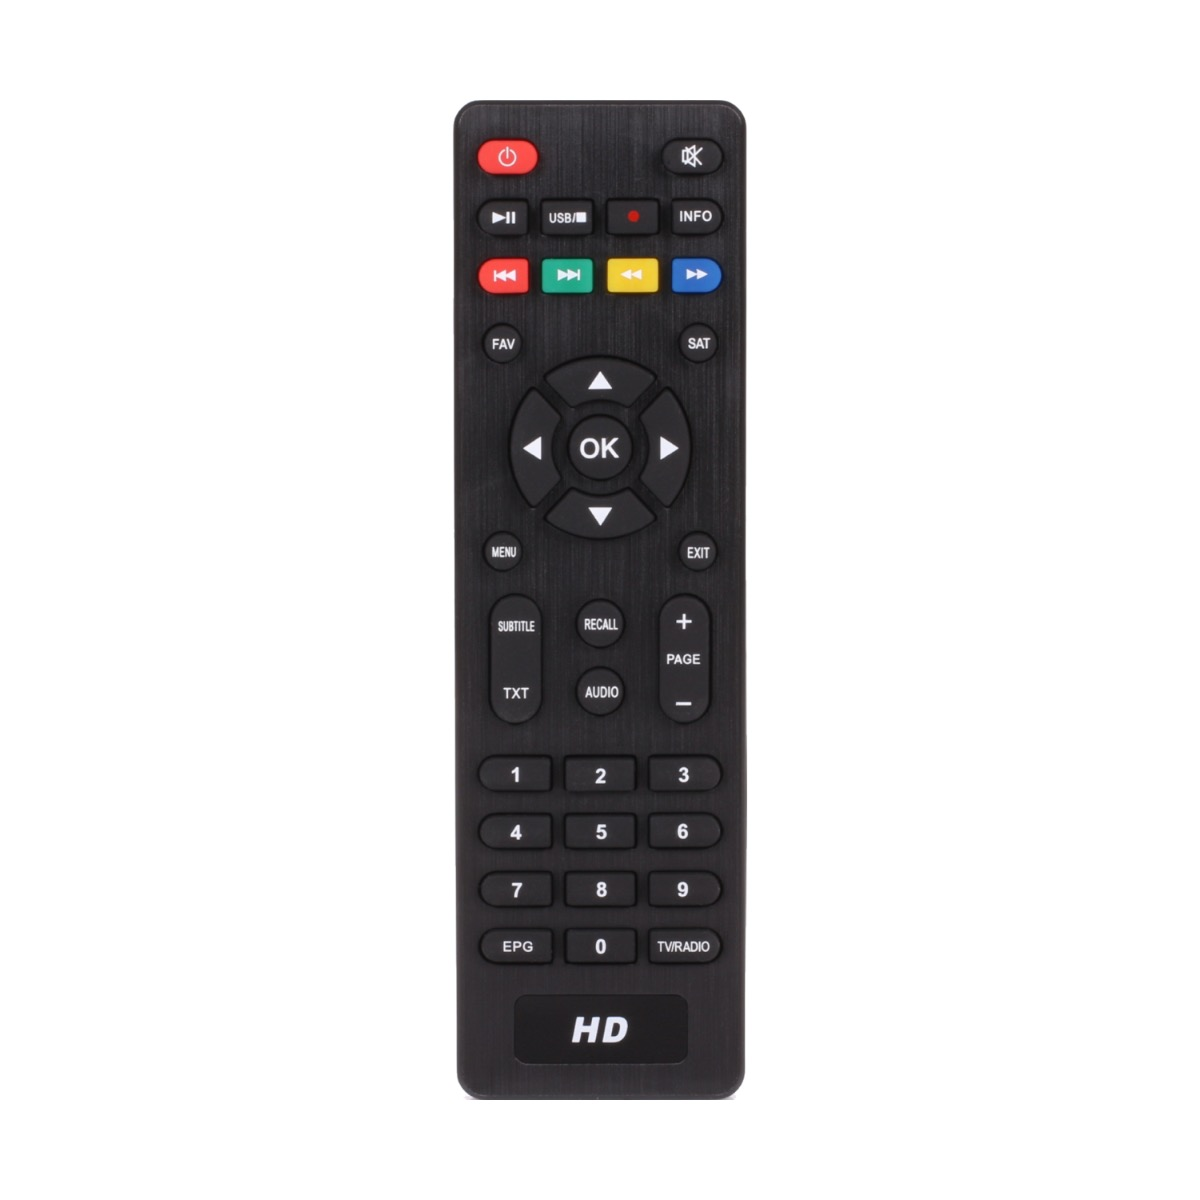 ANKARO ANK DSR 2100 mit schwarz) HD, Receiver PVR, DVB-S, DVB-C2, 1080p Digitaler Full DVB-S2, DVB-T2 (HDTV, Sat DVB-S2, (H.265), Receiver, HDMI PVR-Funktion, Satelliten